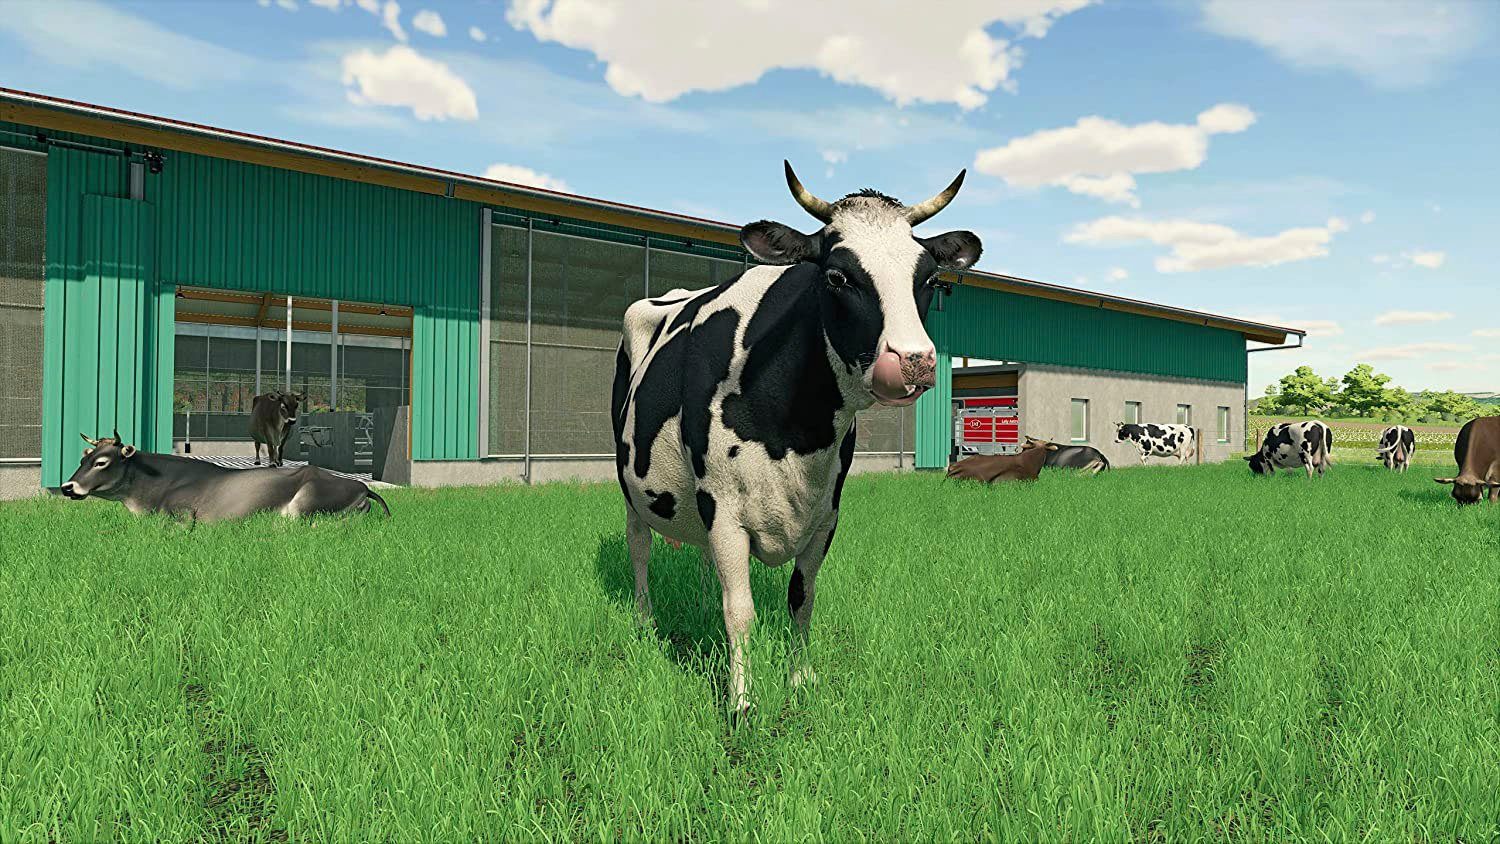 Landwirtschafts-Simulator 22 5 Astragon PlayStation